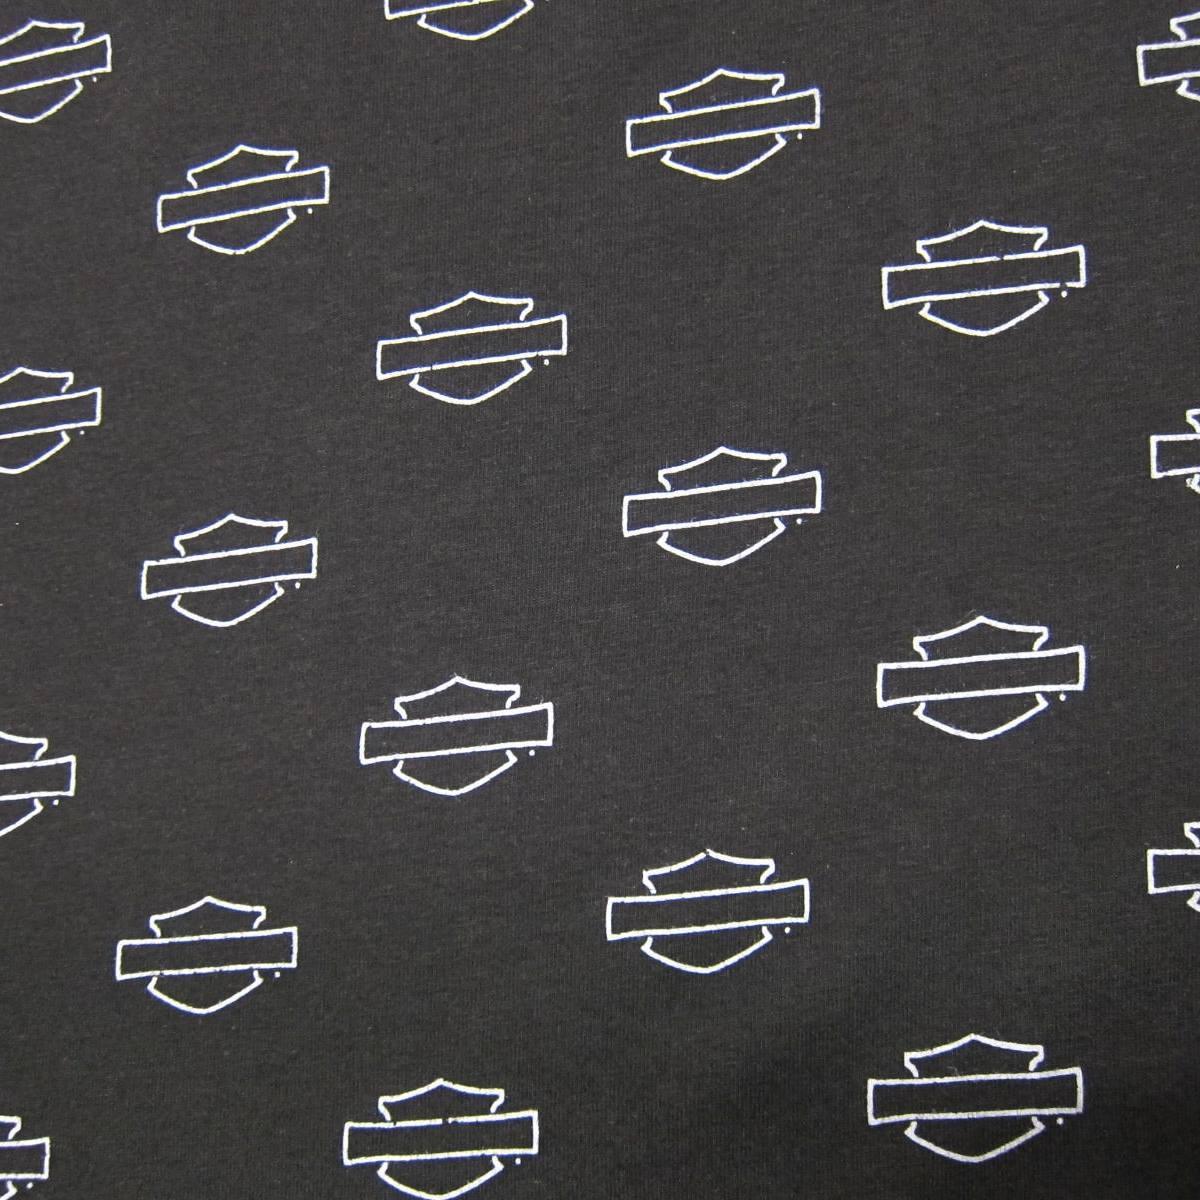 Emblems on Black Cotton/Spandex Jersey Fabric - Nature's Fabrics